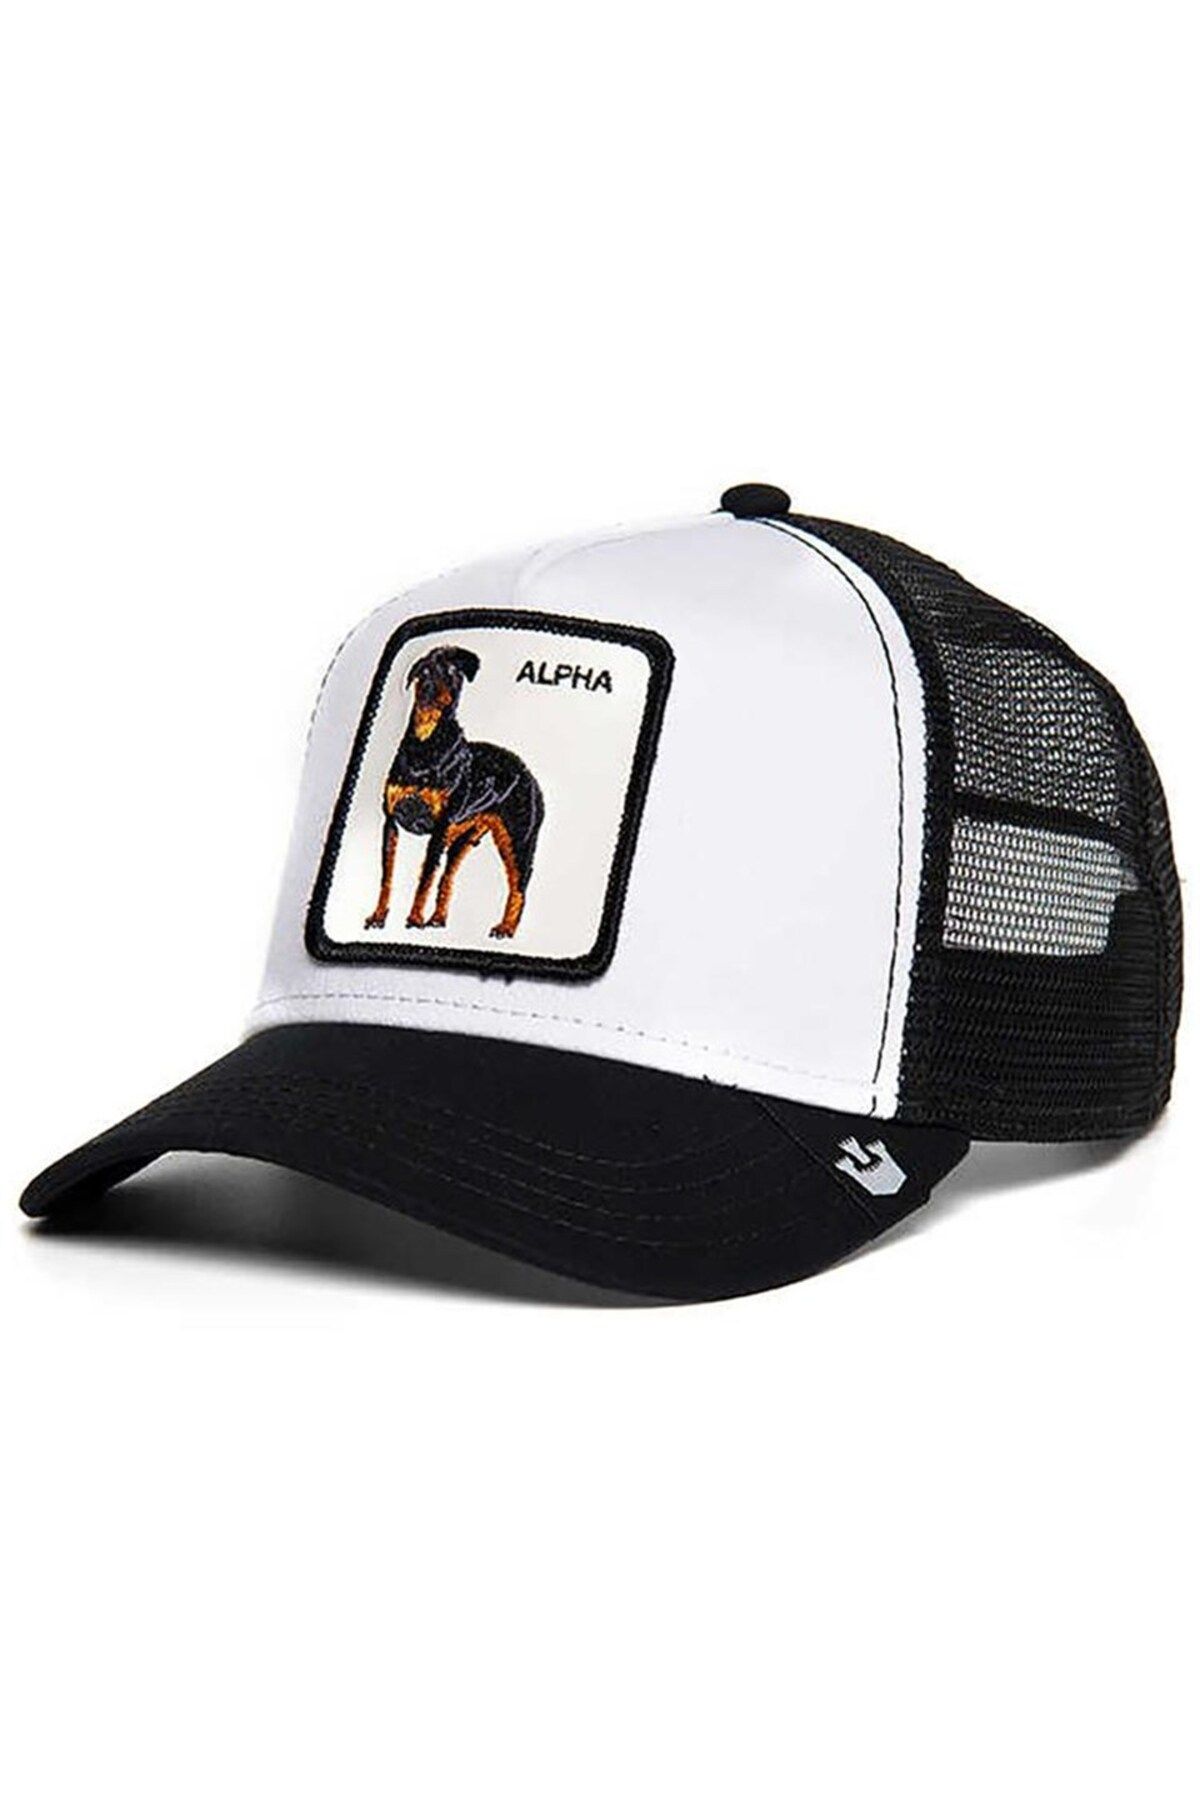 Goorin Bros Alpha Dog ( Rottweiler Köpek Figürlü ) Şapka 101-0214 Beyaz Standart